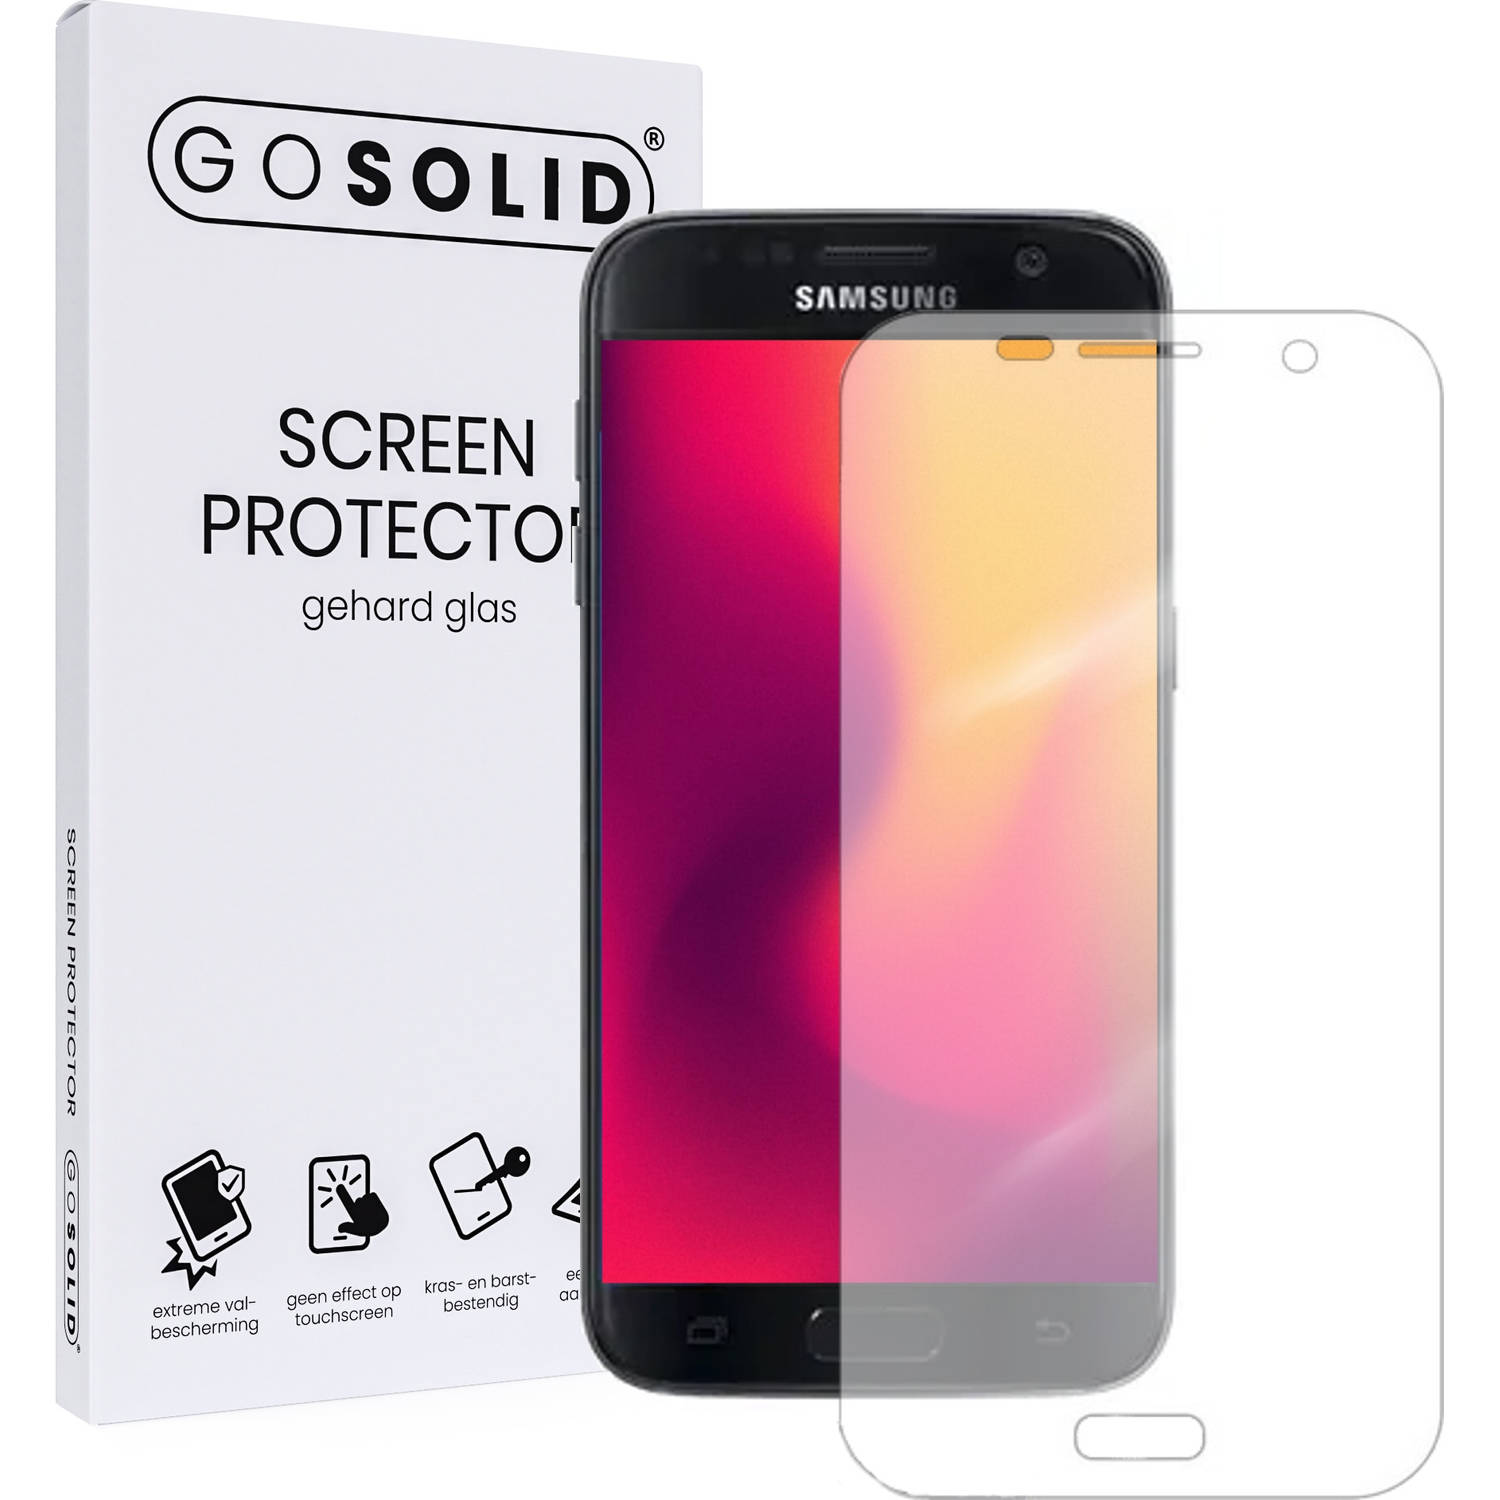 GO SOLID! ® Screenprotector Samsung Galaxy A3 2016 - gehard glas